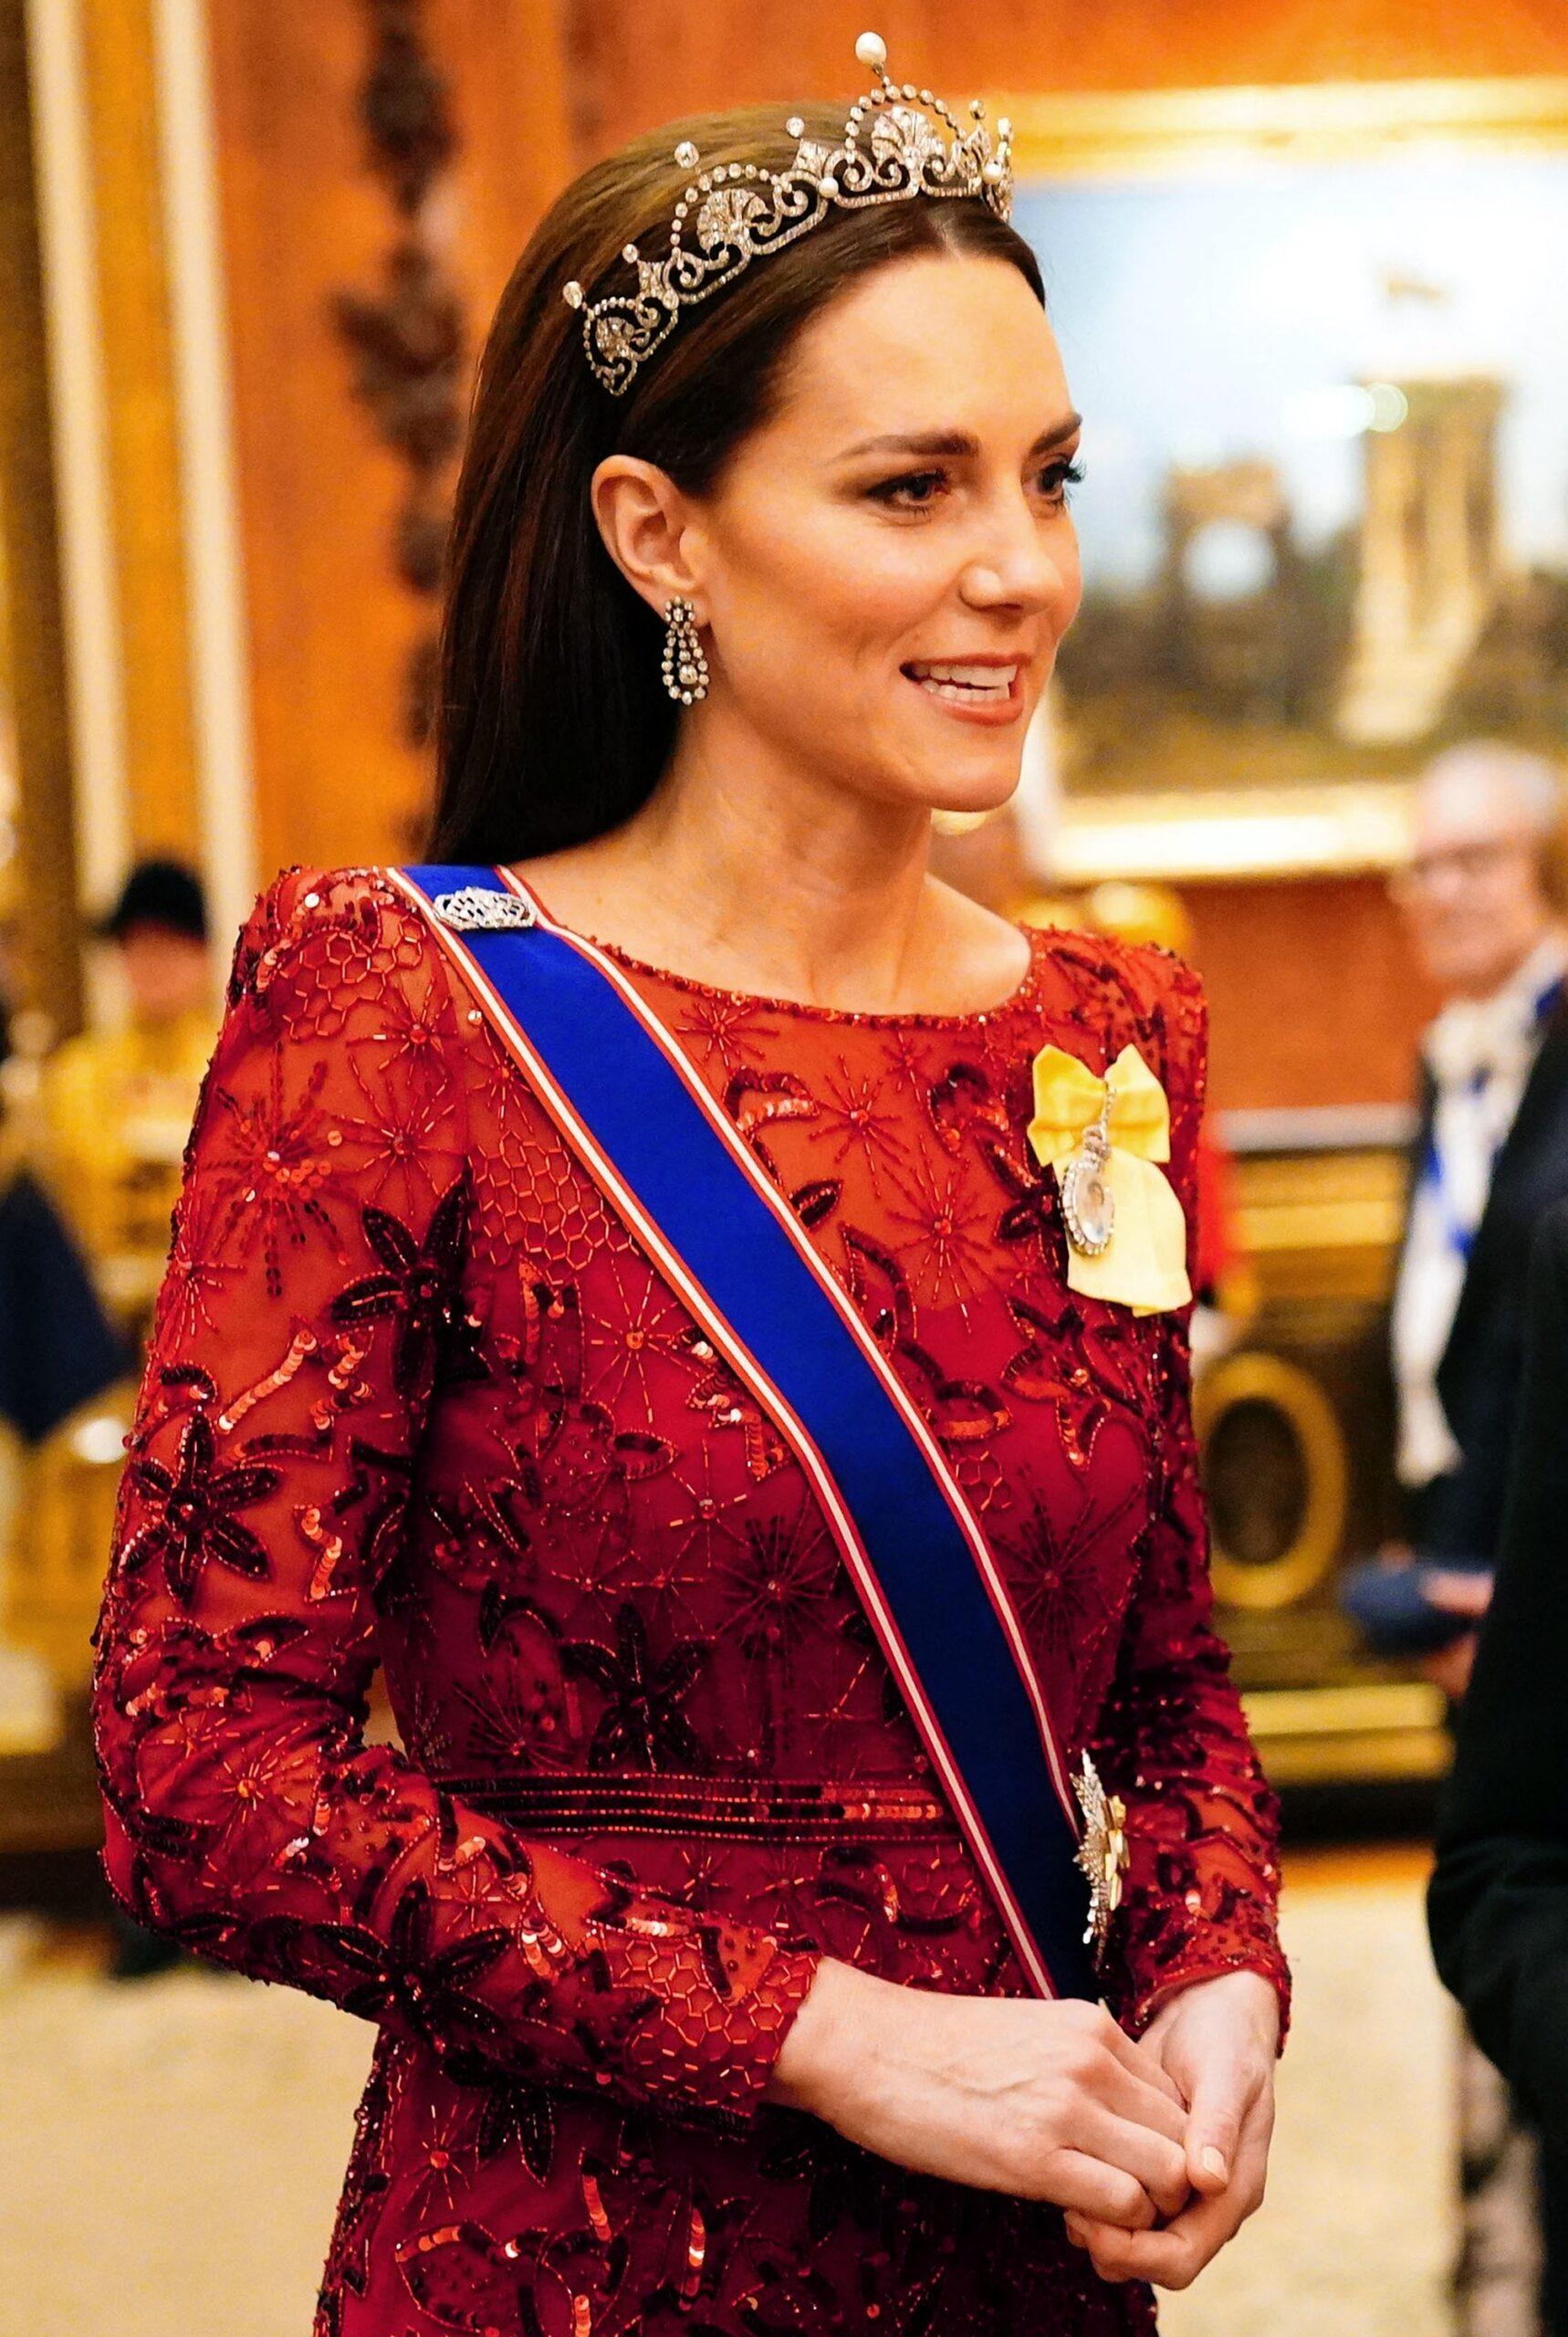 Rei Carlos III concede novo título de prestígio à princesa Kate Middleton